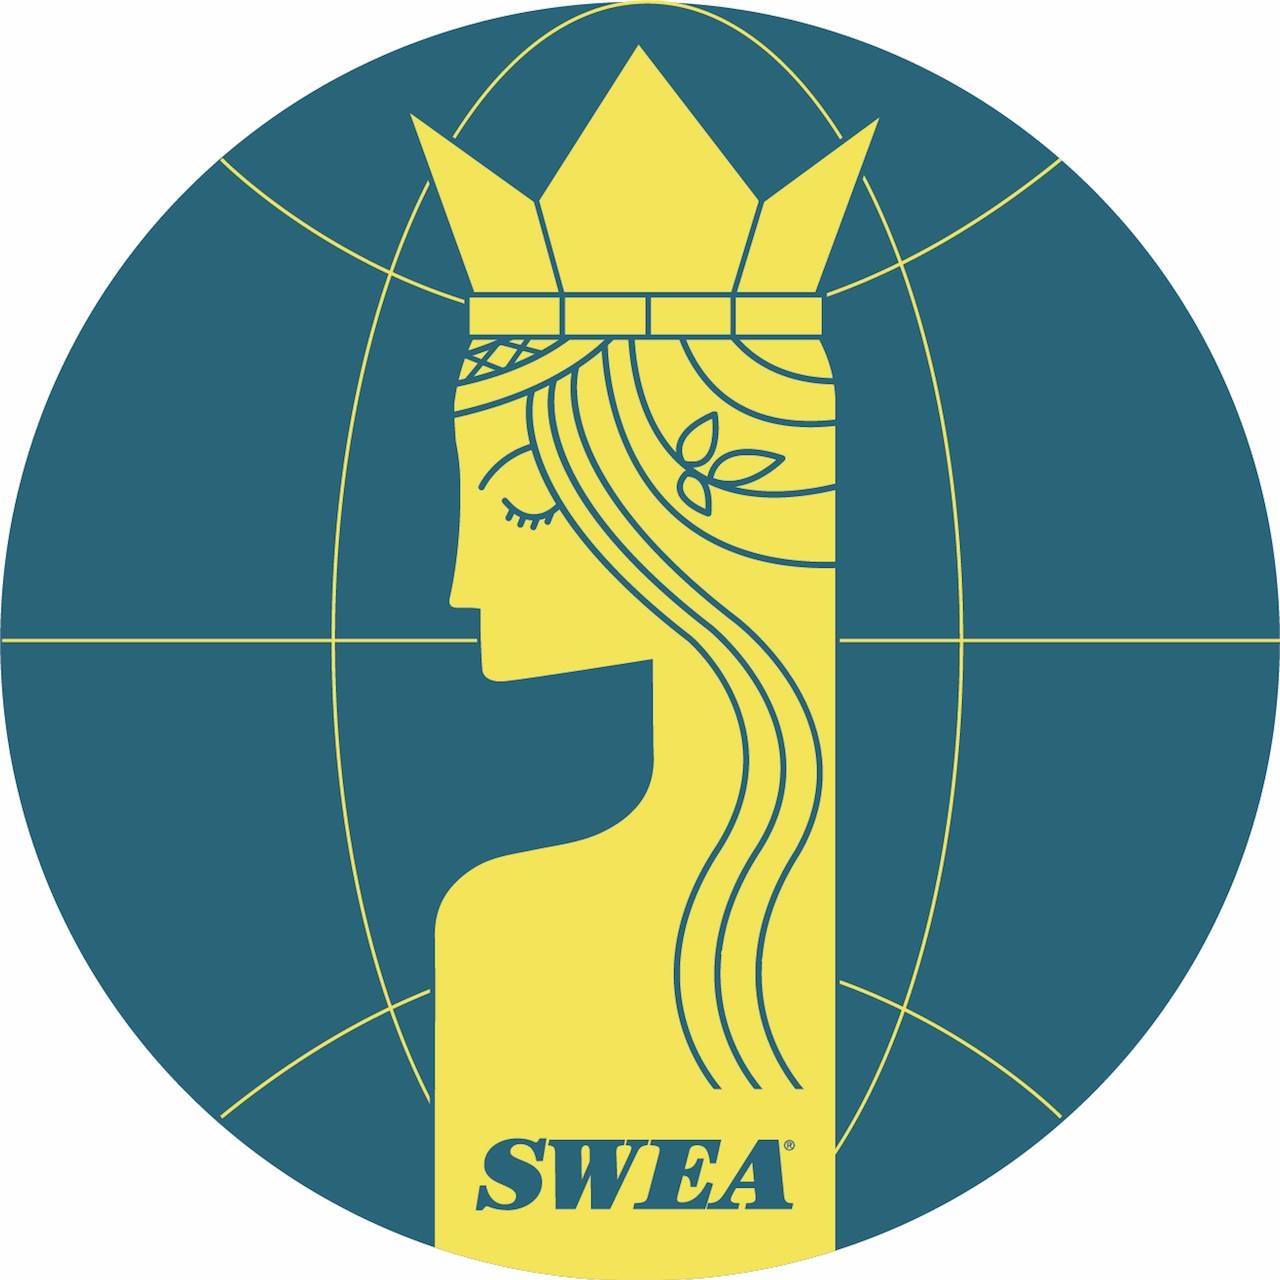 Swedish Speaking Organization in San Francisco California - Swedish Women’s Educational Association Orange County